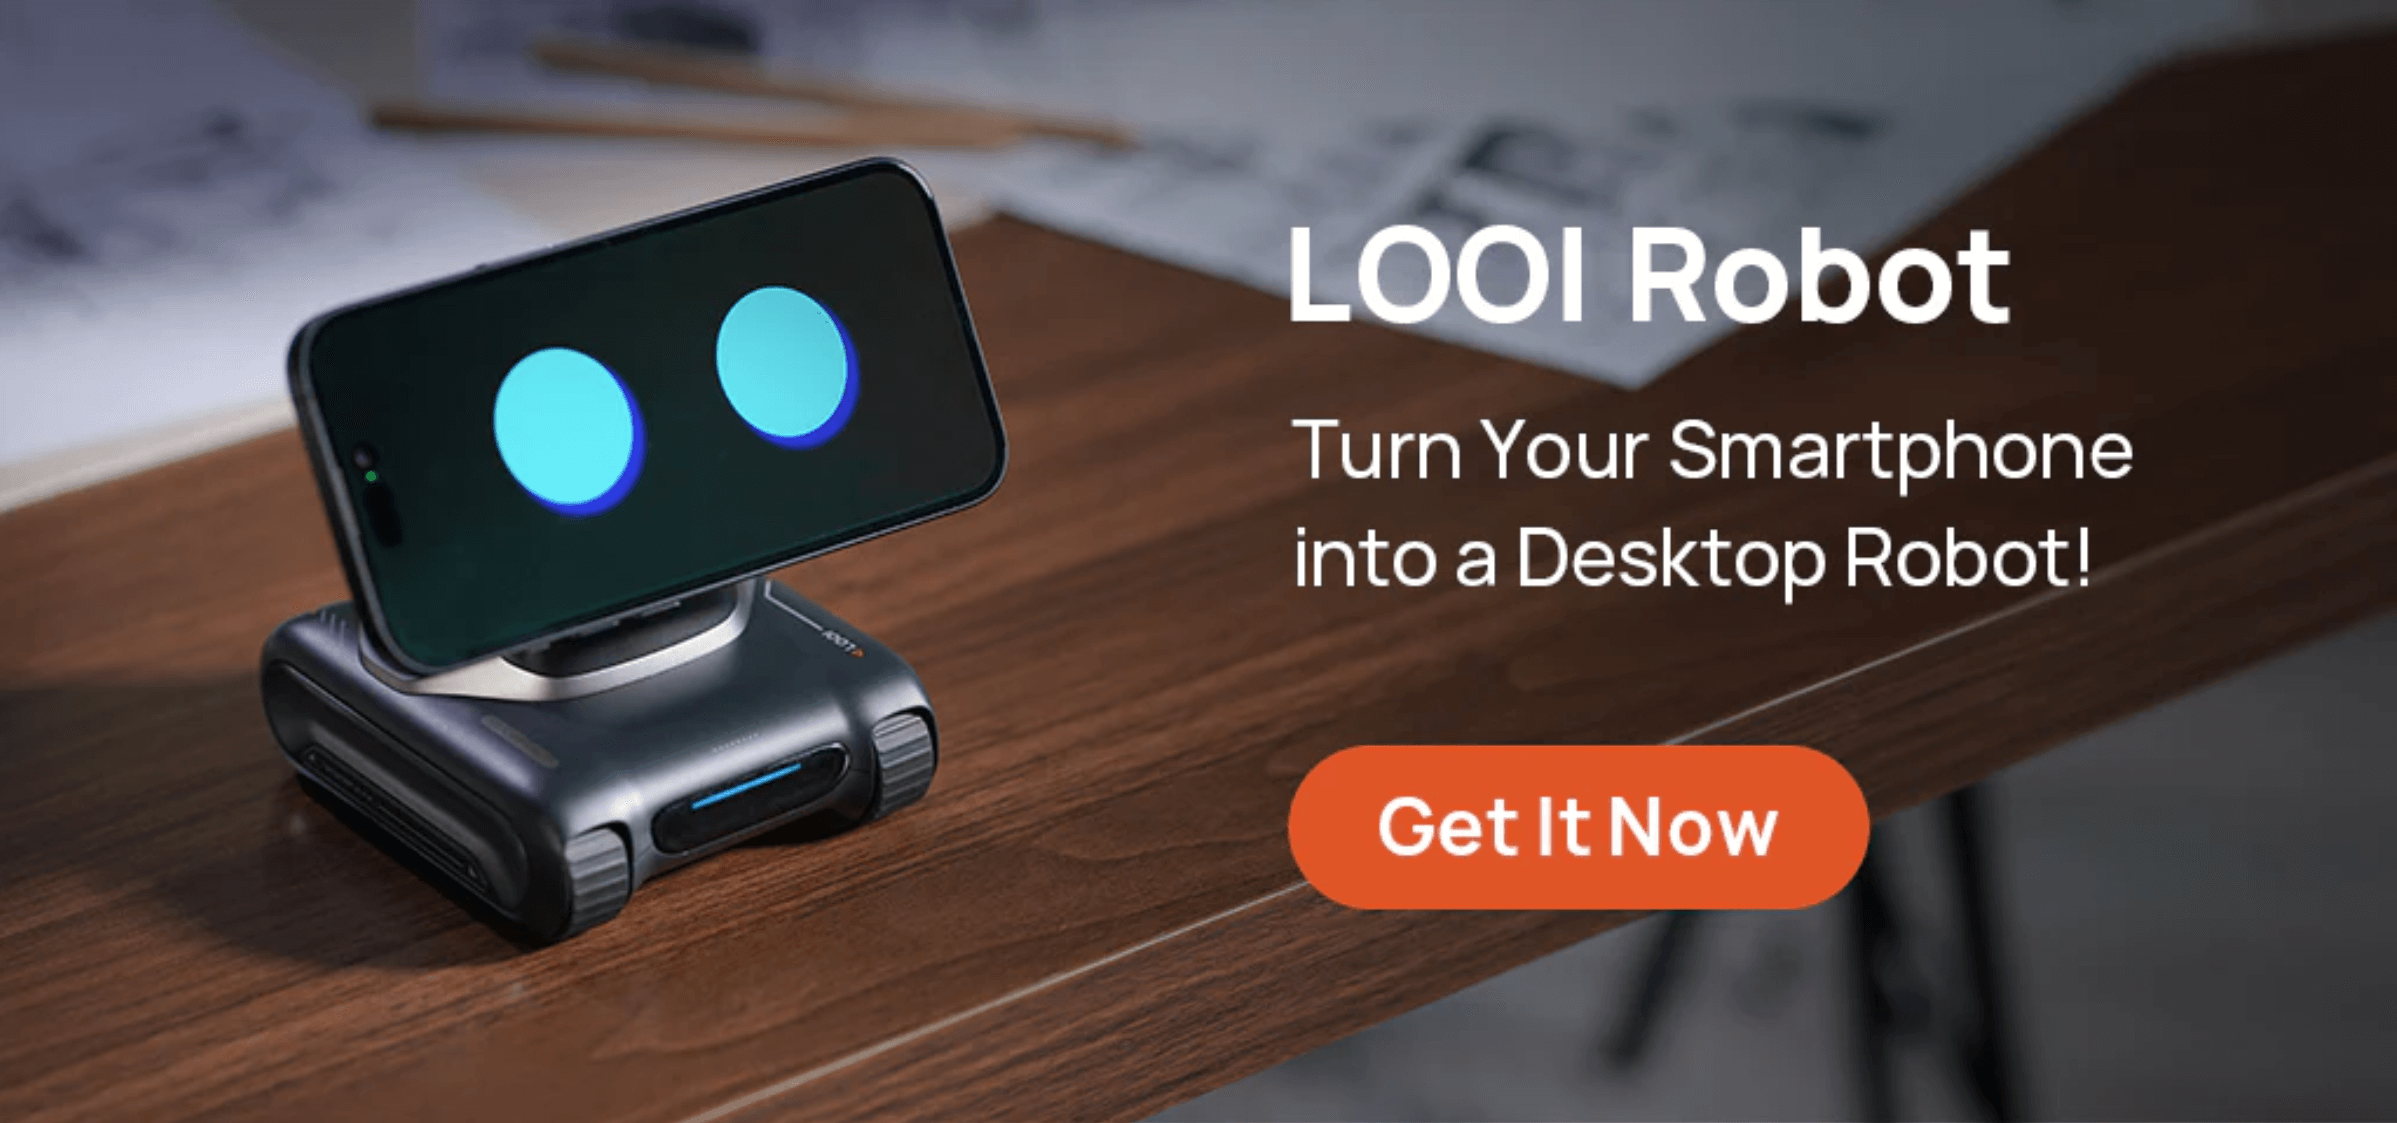 LOOI Robot Turn Your Smartphone into a Desktop Robot